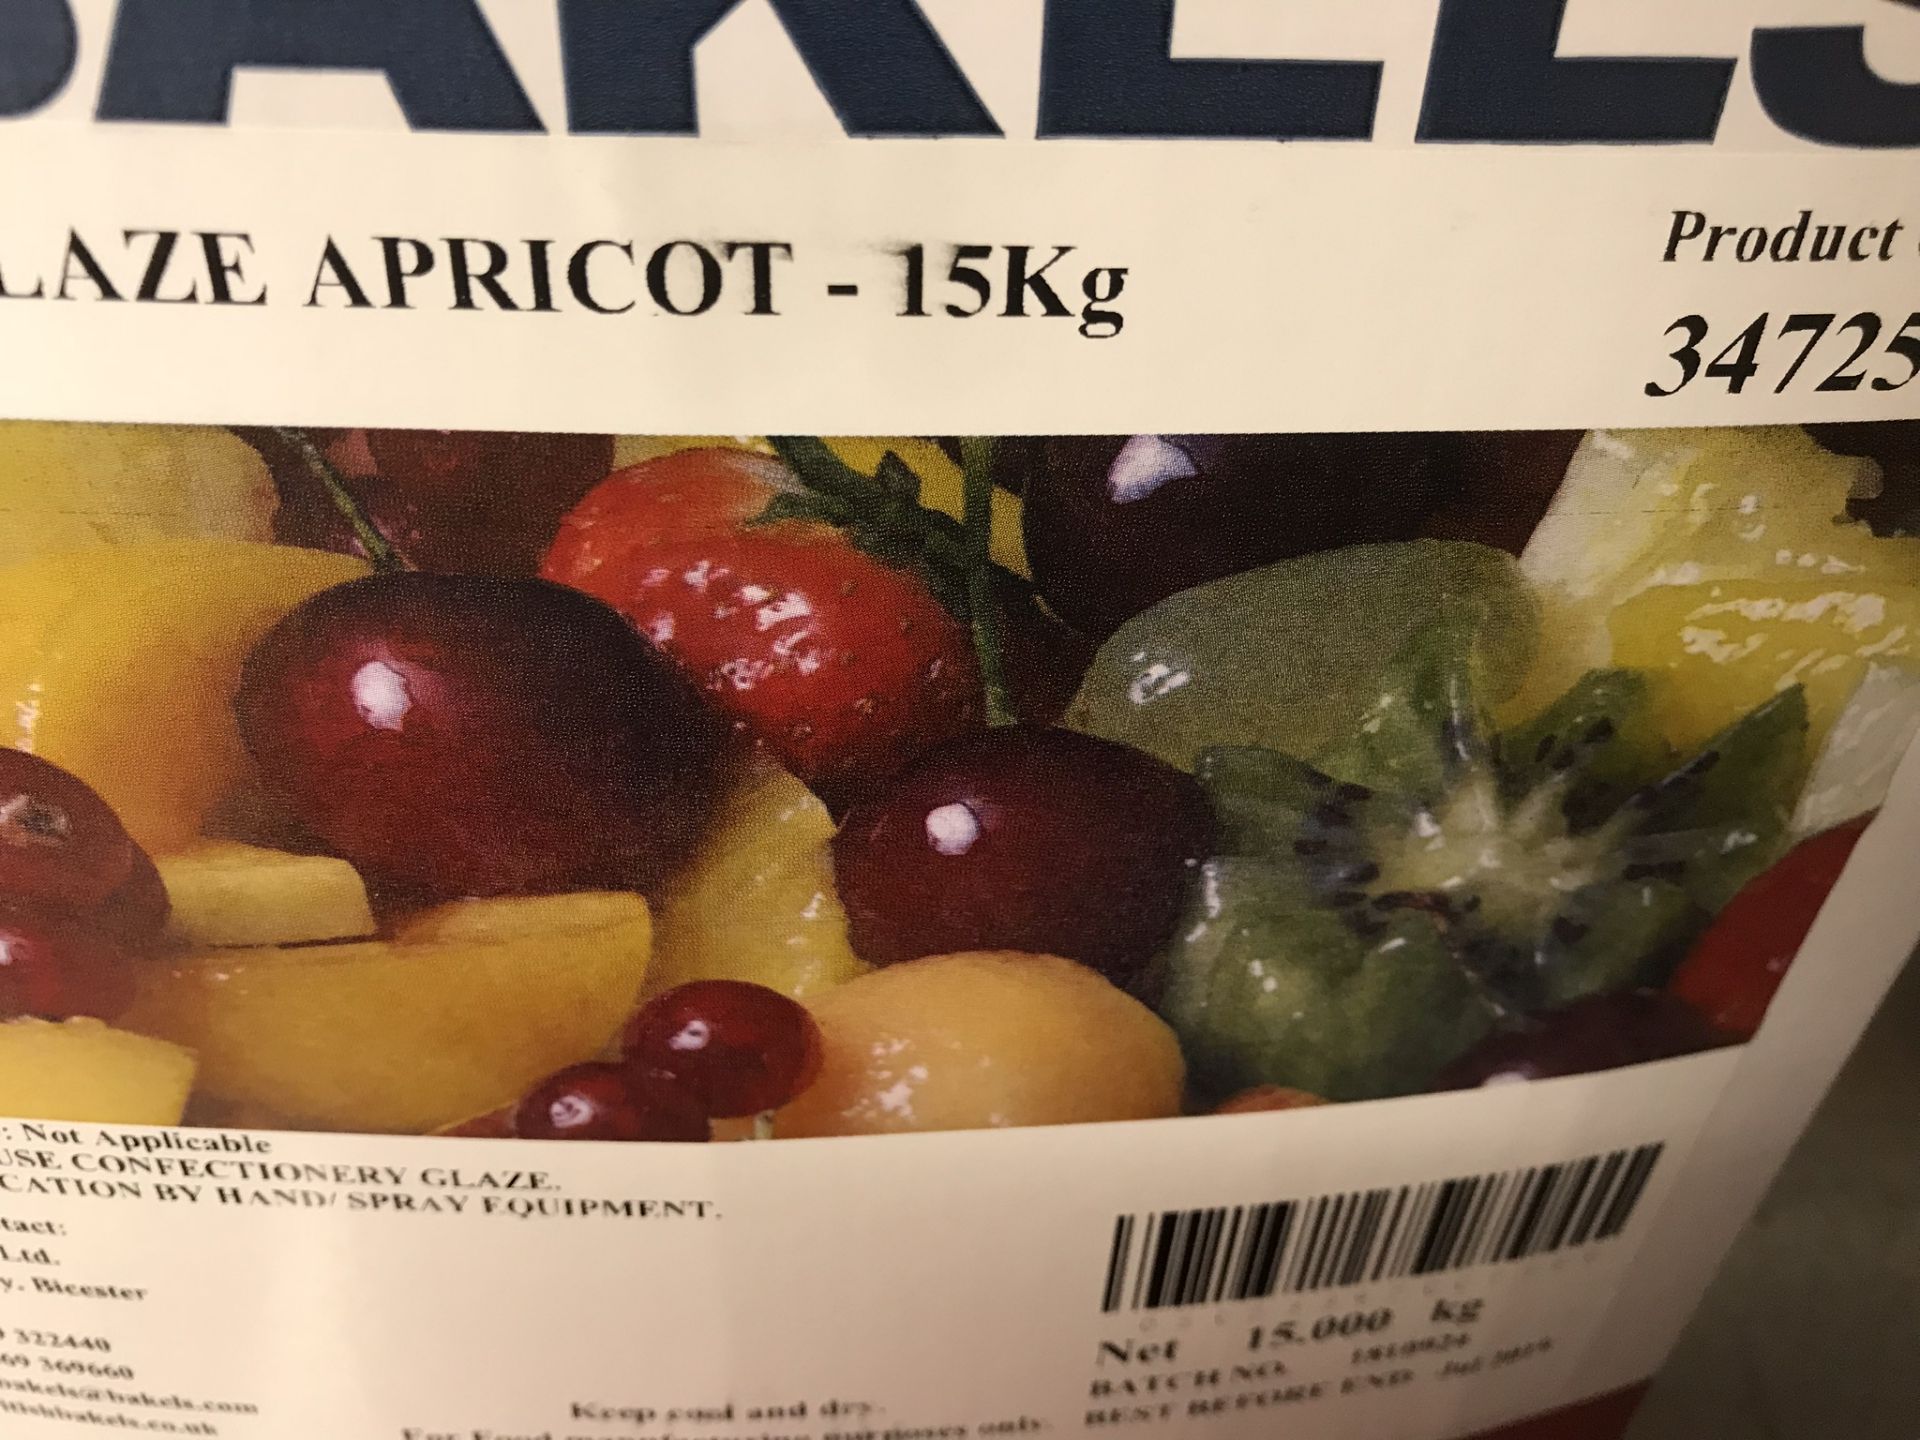 3 x Bakels Inst Superglaze Apricot - 15kg - Product Code: 347250 - 07/2019 - Image 4 of 5